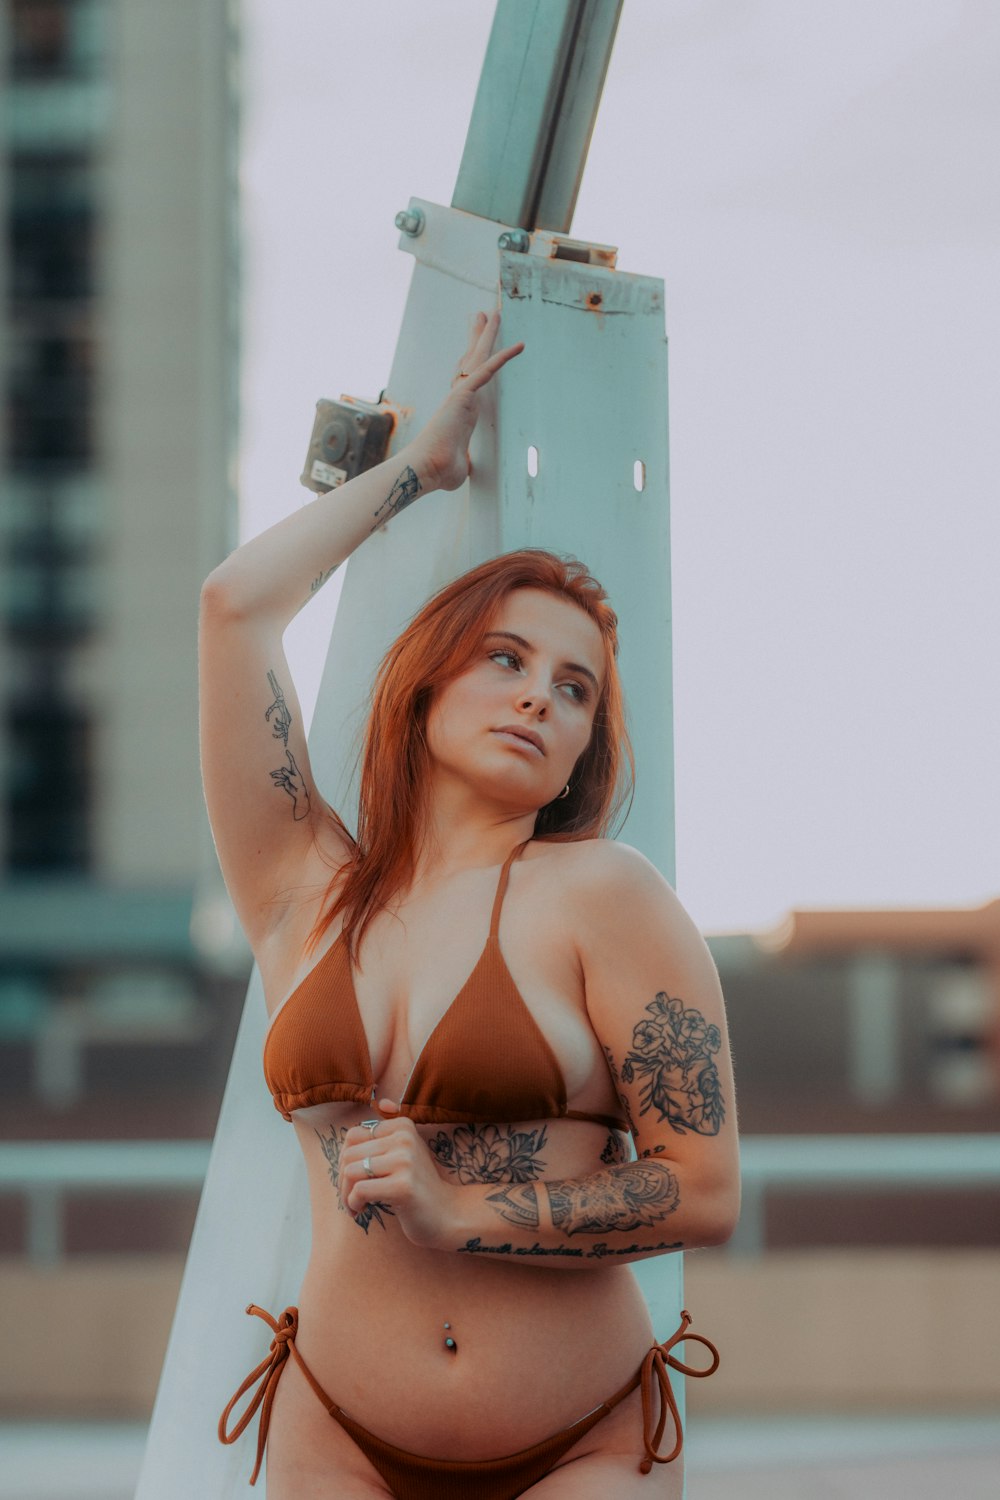 a woman in a bikini leaning against a pole